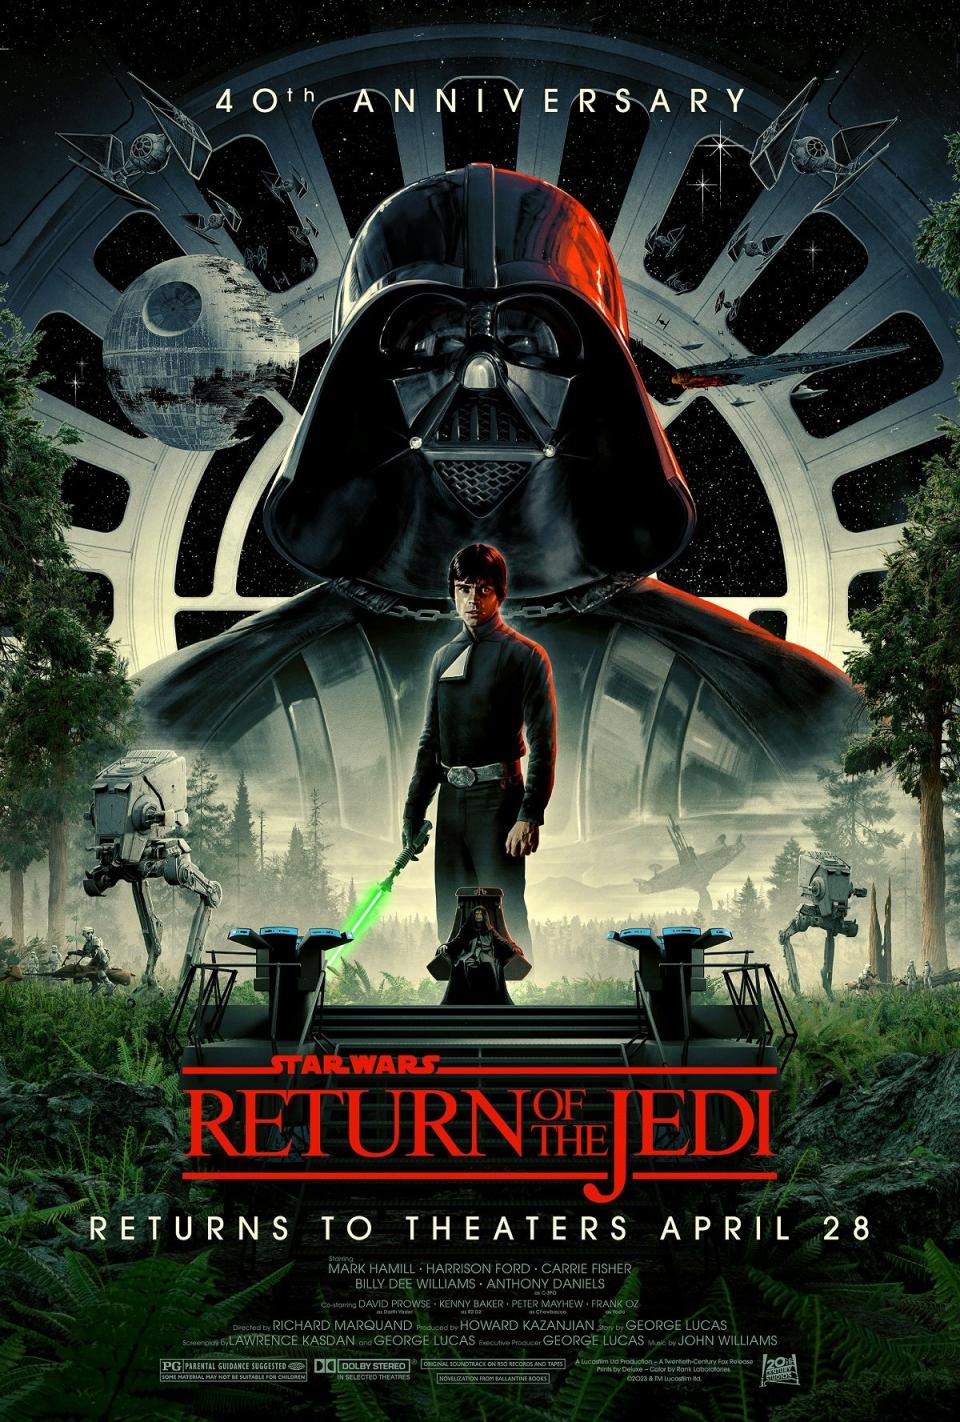 Matt Ferguson's Return of the Jedi 40th anniversary poster. 